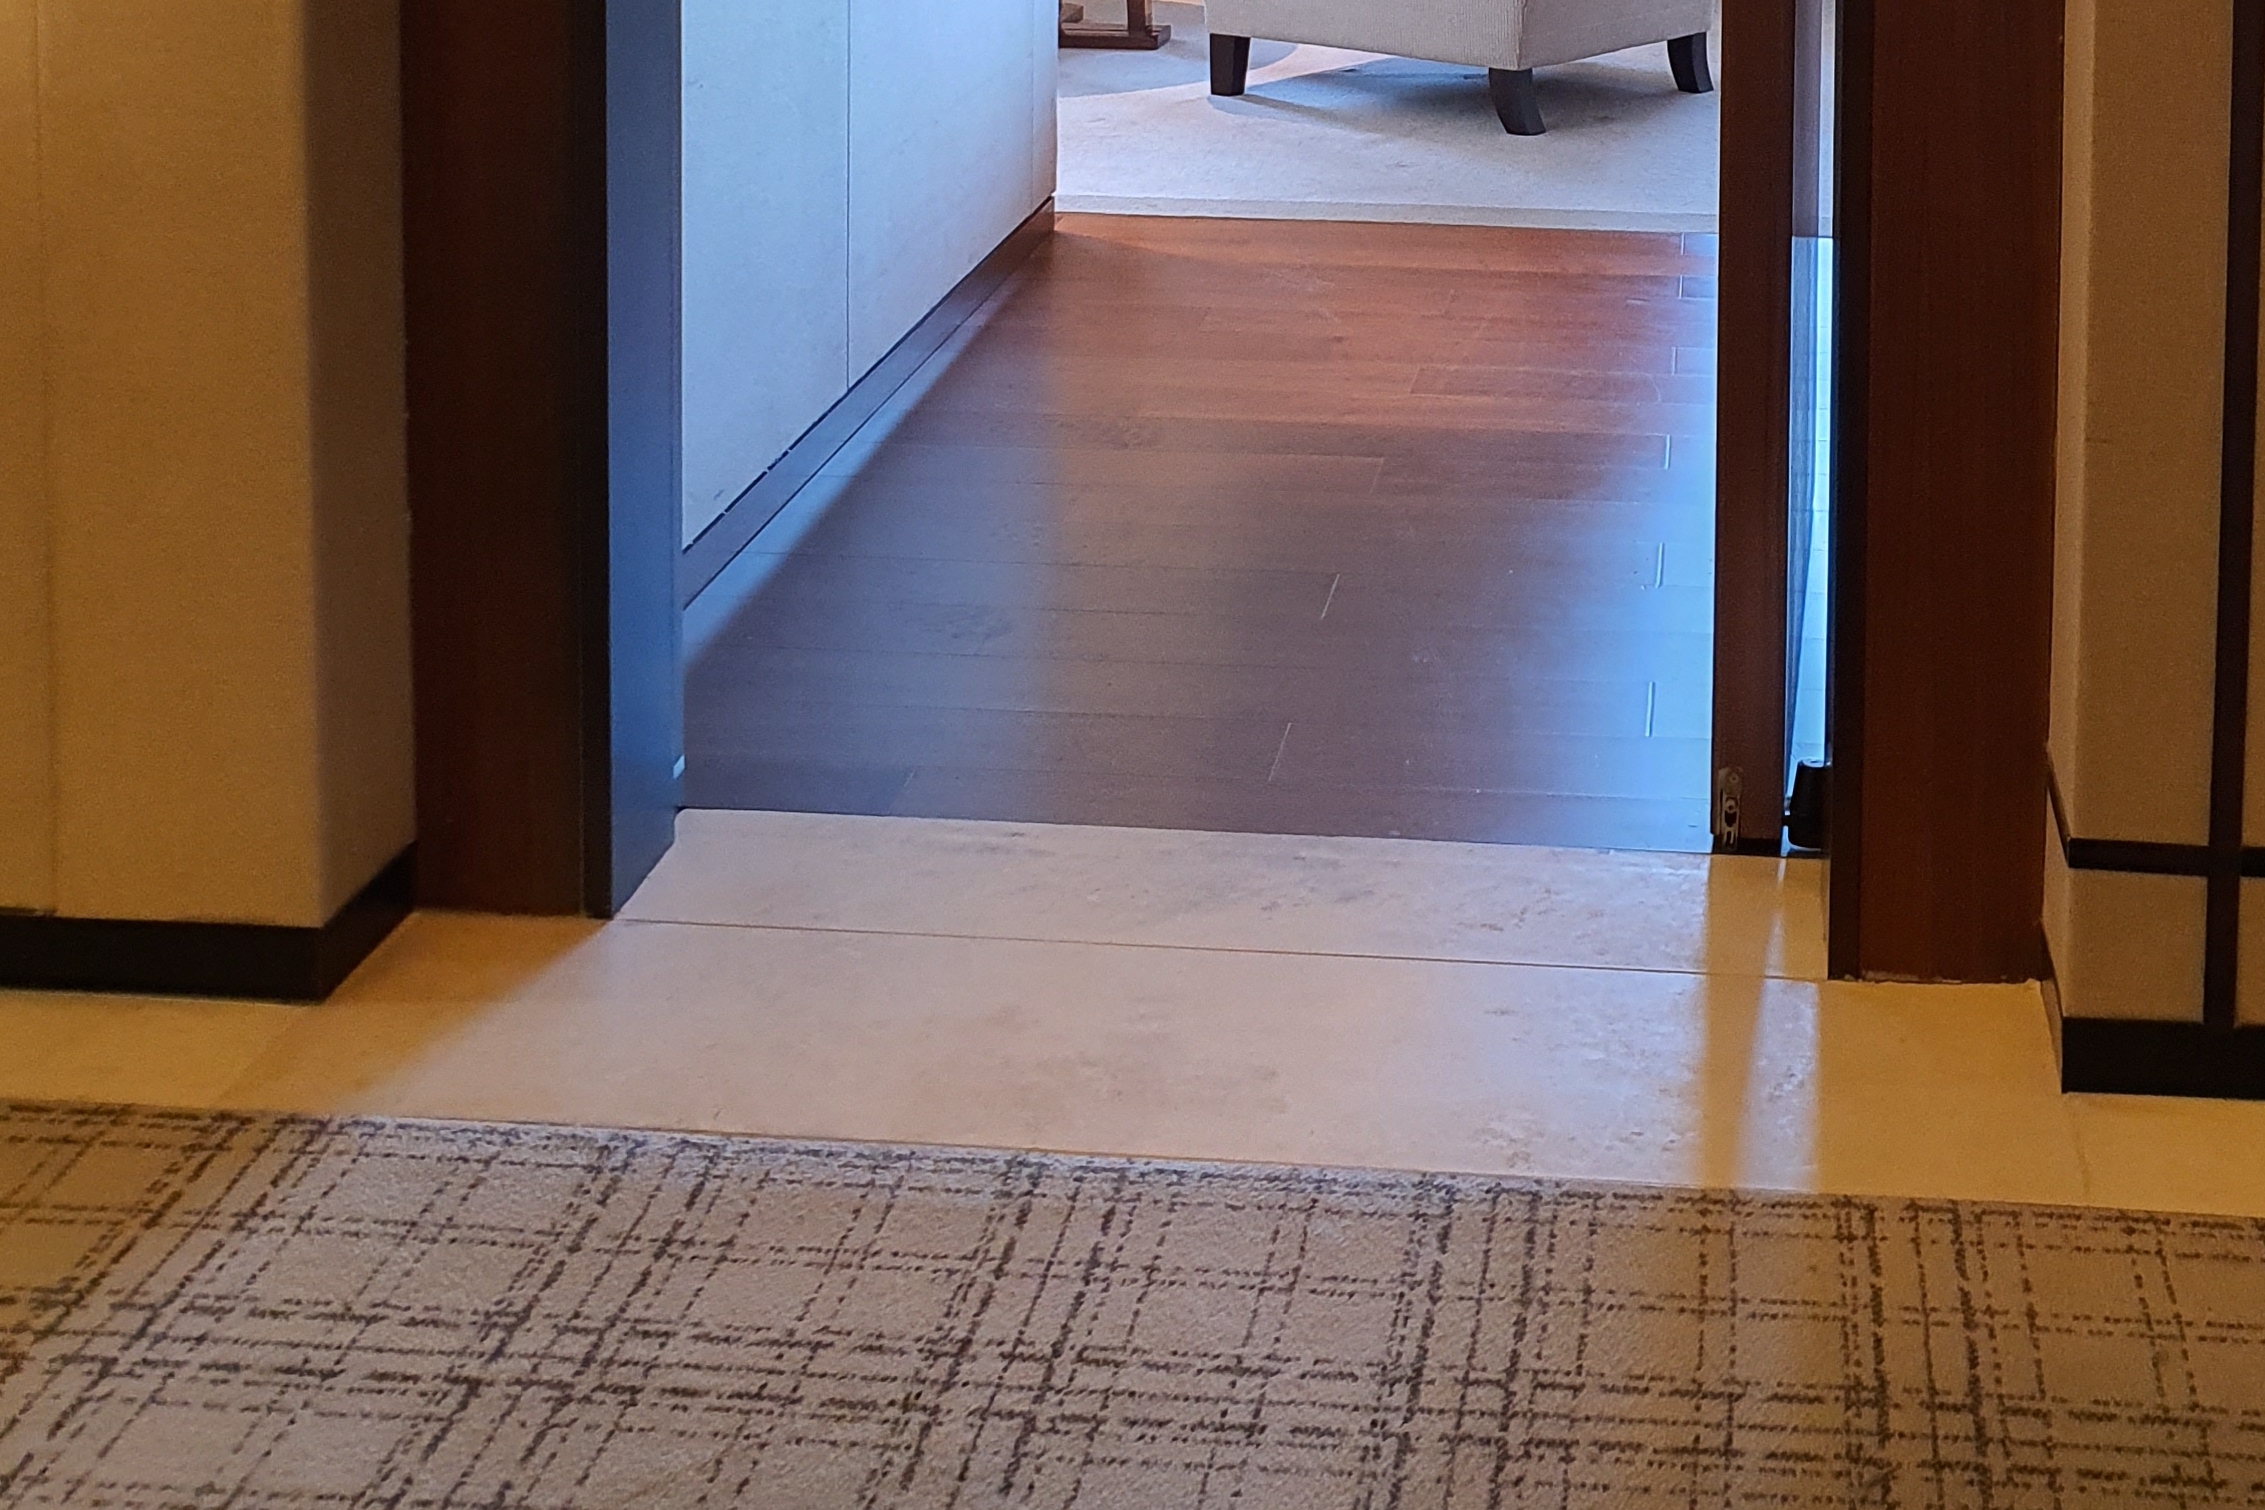 Guestroom doorway0 : Room entrance of the Hotel Shilla with flat floor
